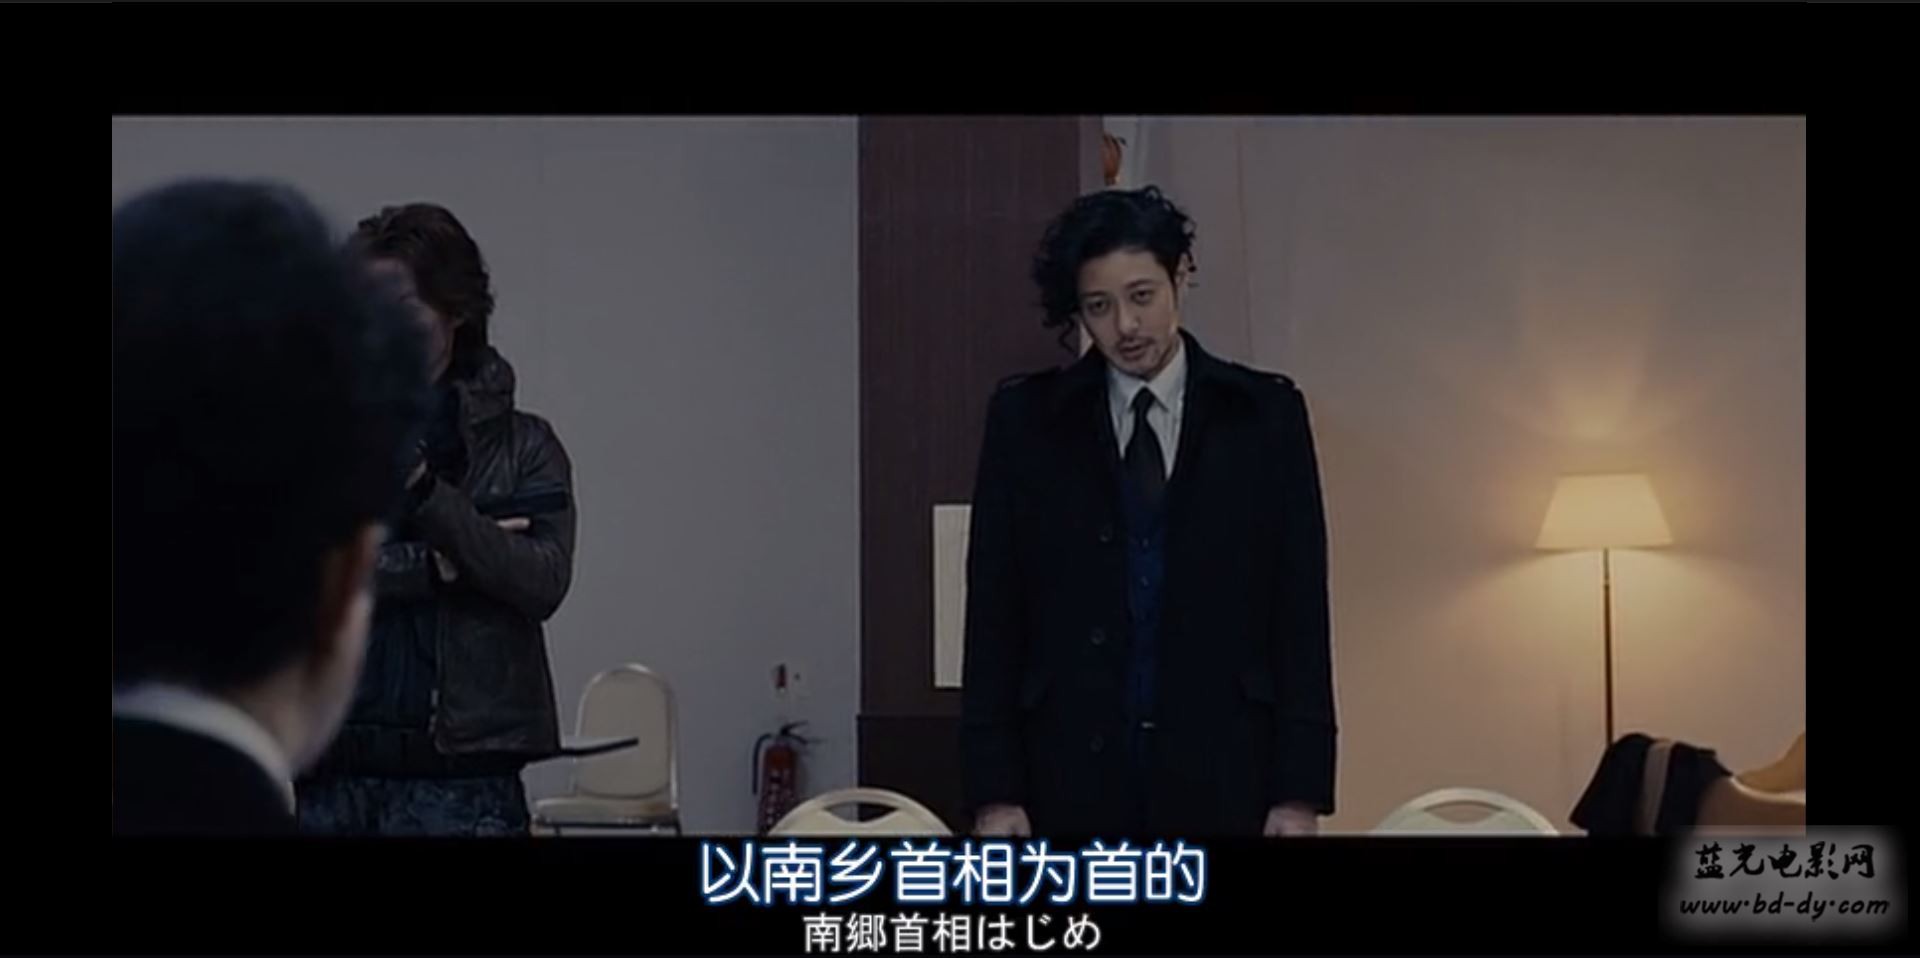 《S-最后的警官 电影版》2015日本动作犯罪.DVD.中日双字截图;jsessionid=UdSQMZz21uZ80B6Qz7Y4DWd6BdVk7JehaILxKki6